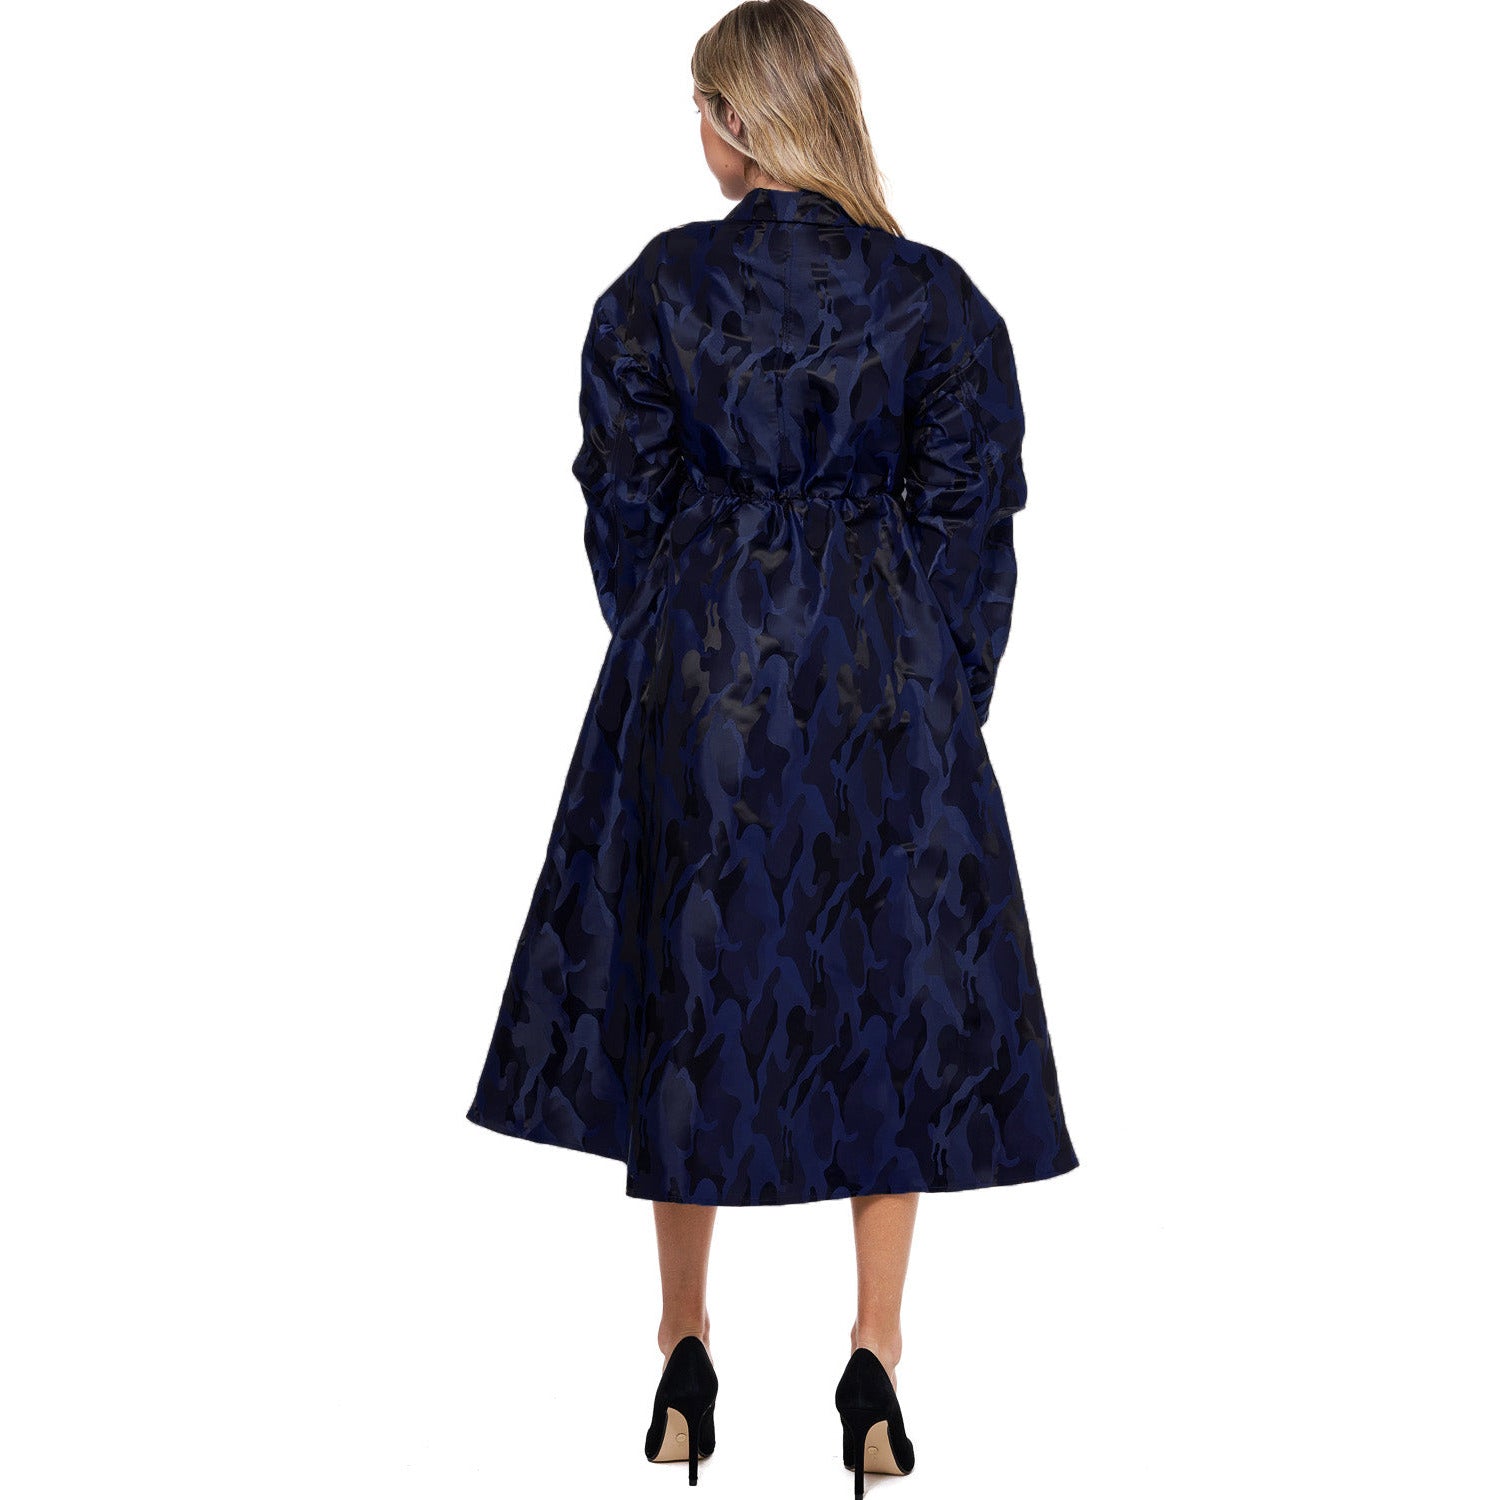 Gianna Camo Print Coat Dress - Ariya's Apparel and Accessories